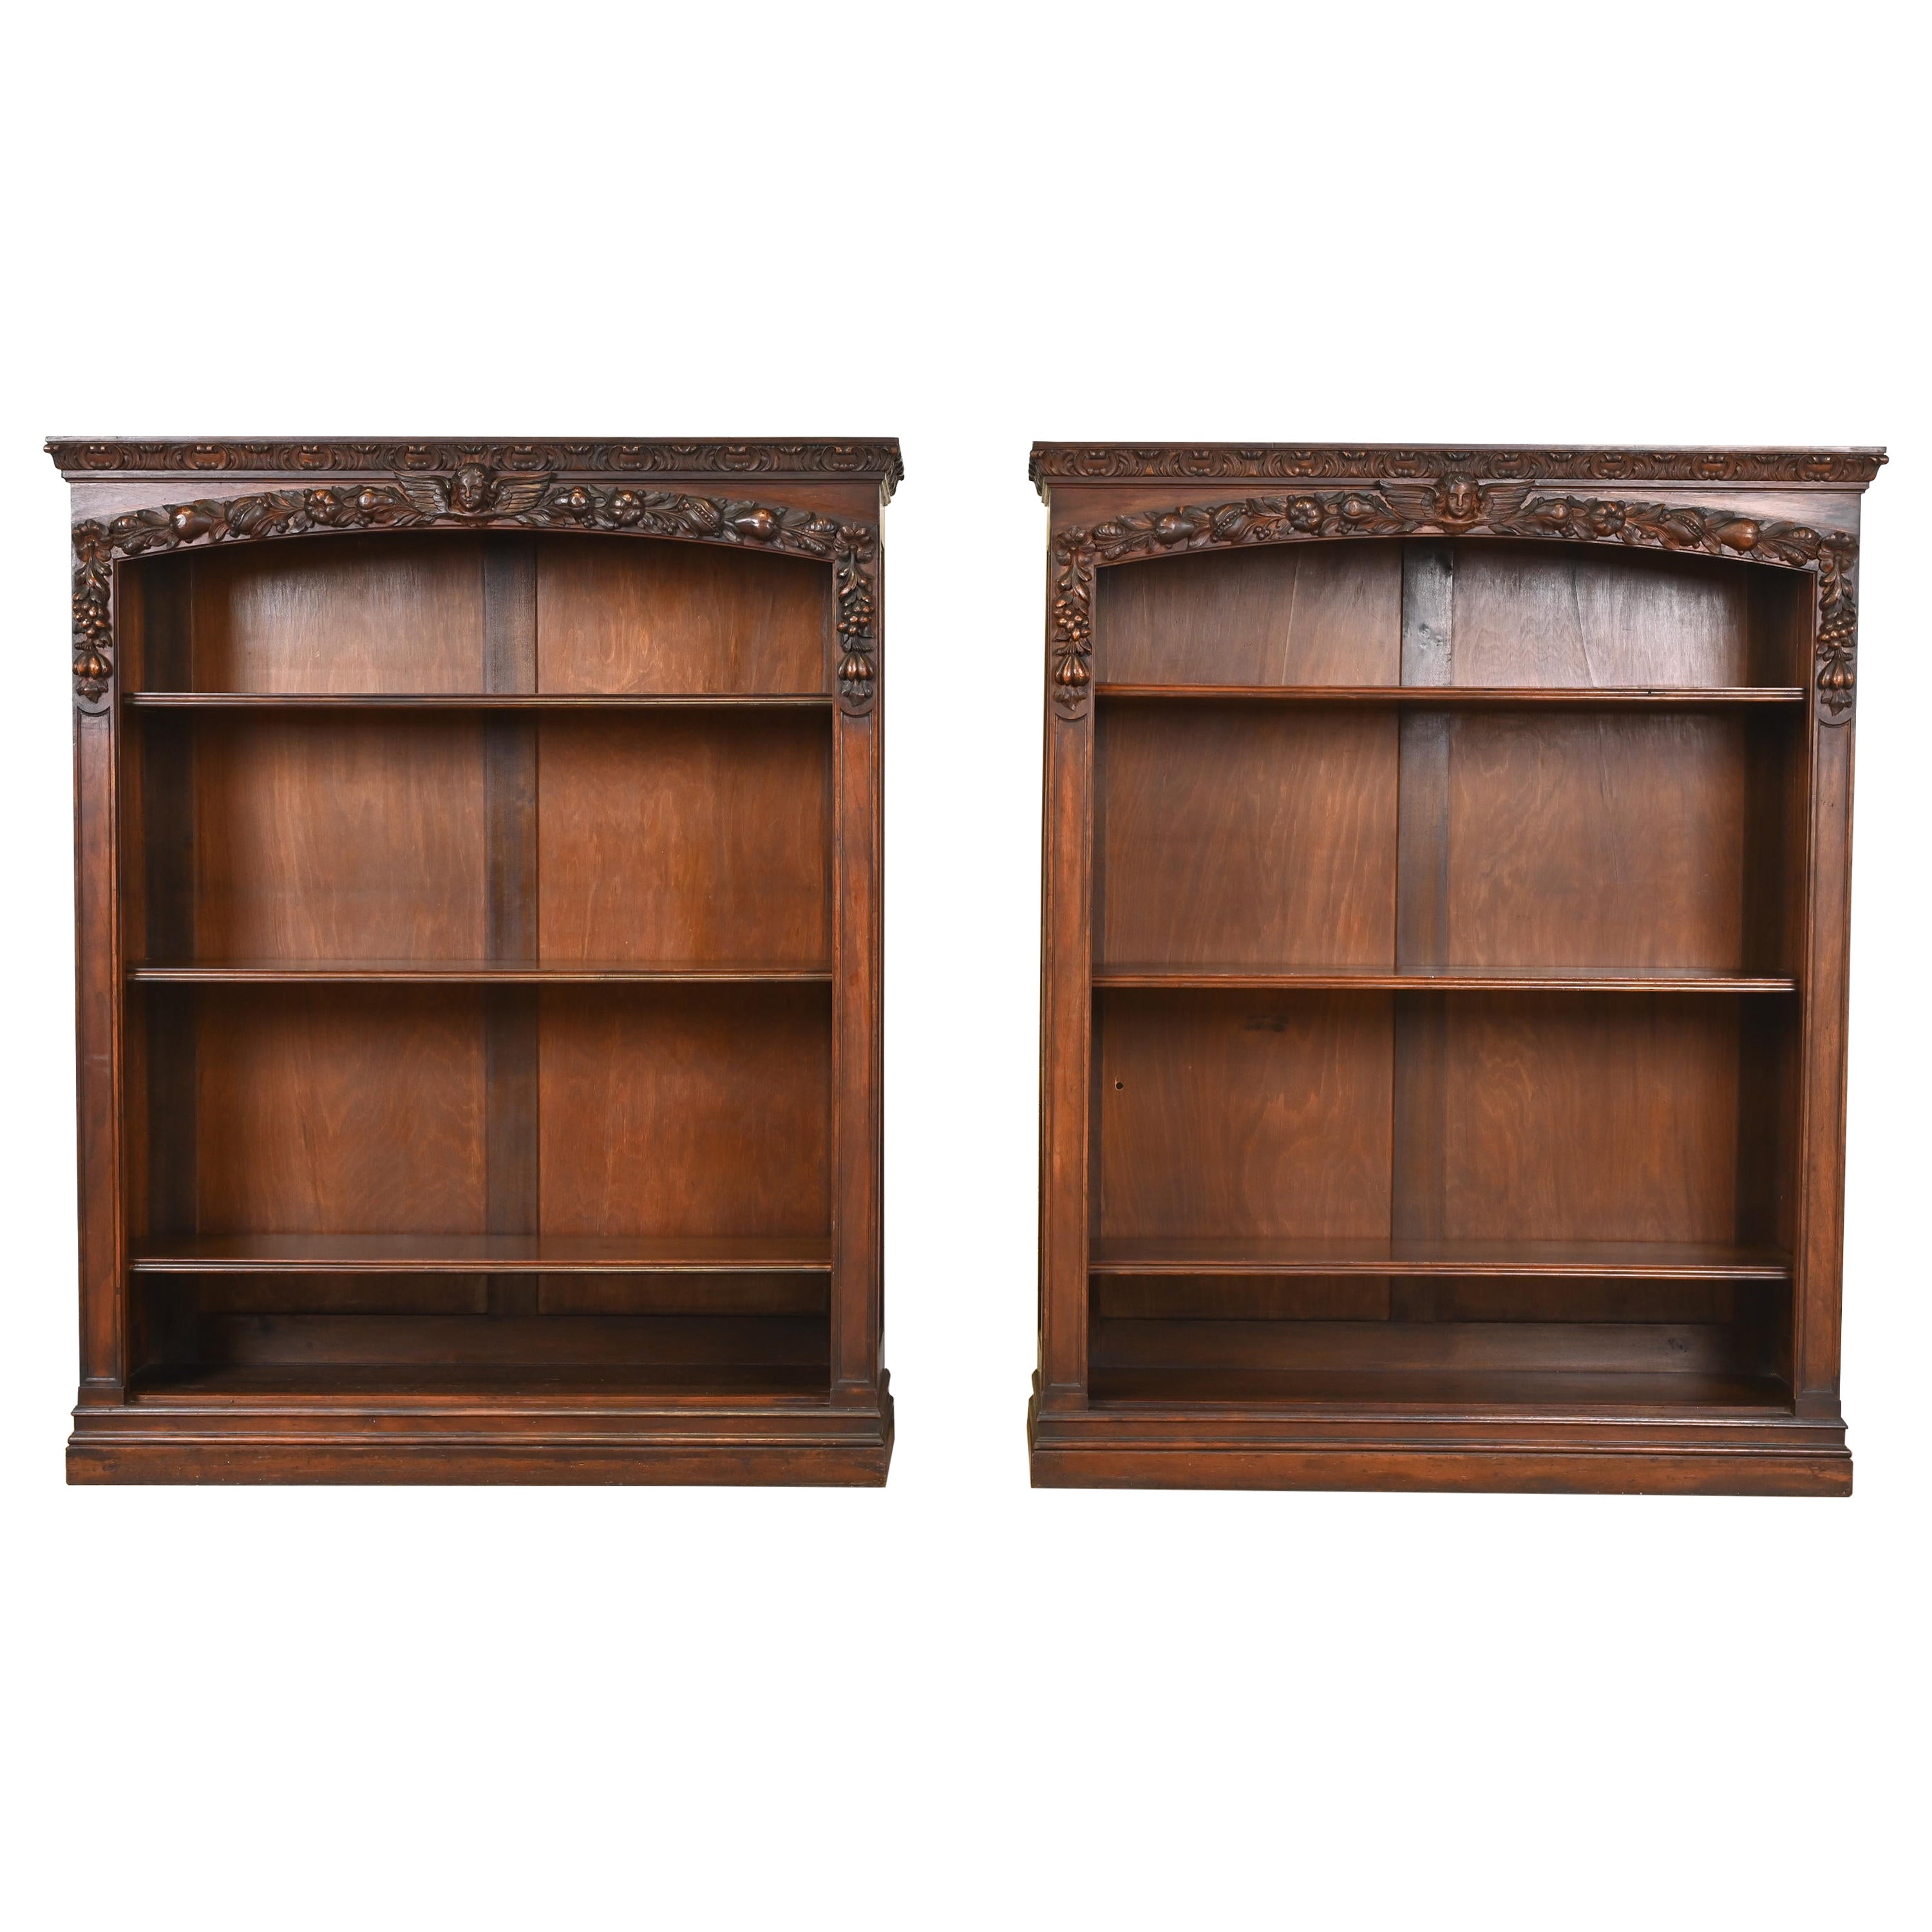 R.J. Horner Style Antique Victorian Renaissance Revival Carved Walnut Bookcases For Sale